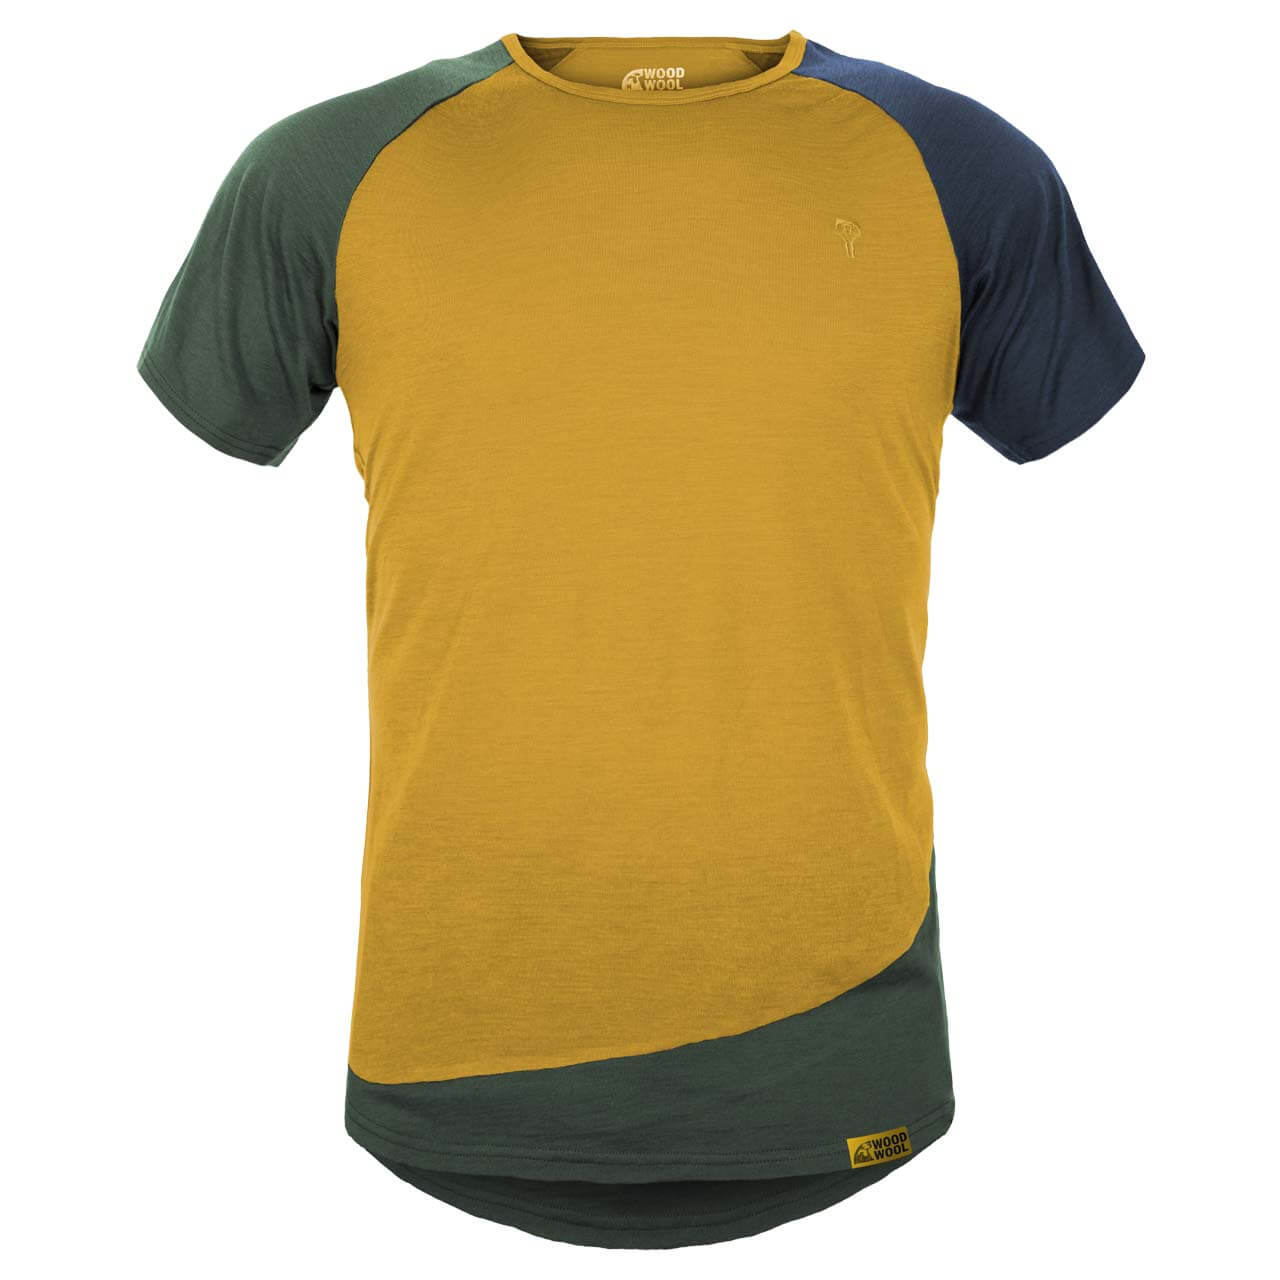 Grüezi Bag WoodWool T-Shirt Mr. Kirk - Daisy Daze Yellow, S